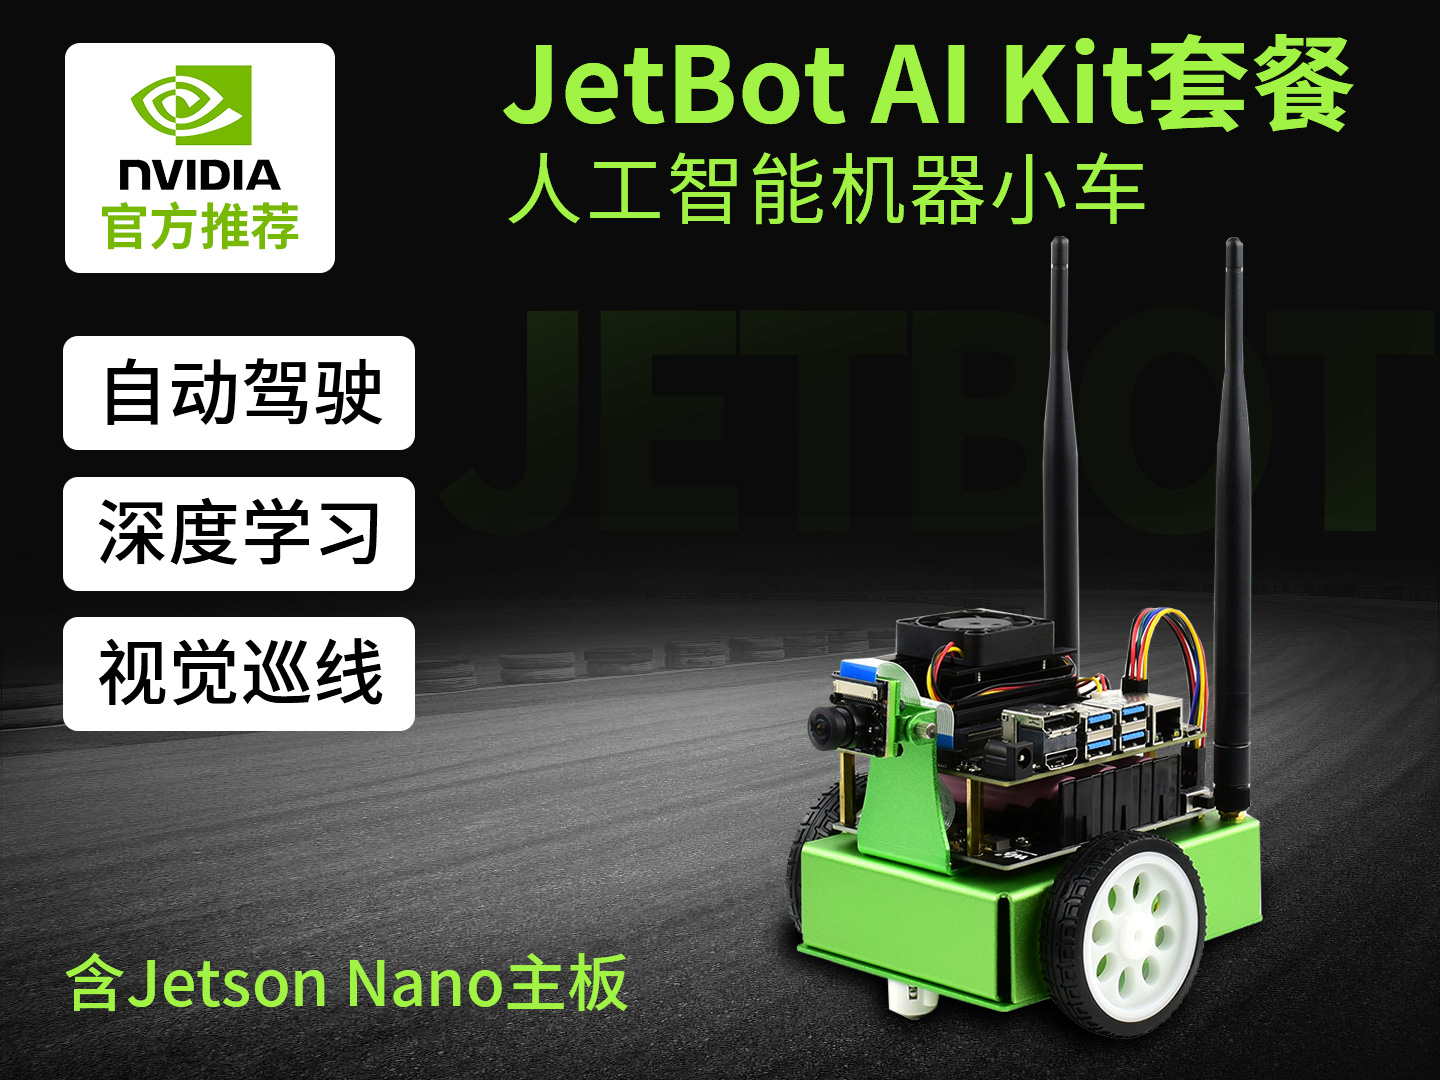 NVIDIA官方推荐JetBot AI Kit人工智能机器车 套餐B(含微雪Jetson Nano套件)